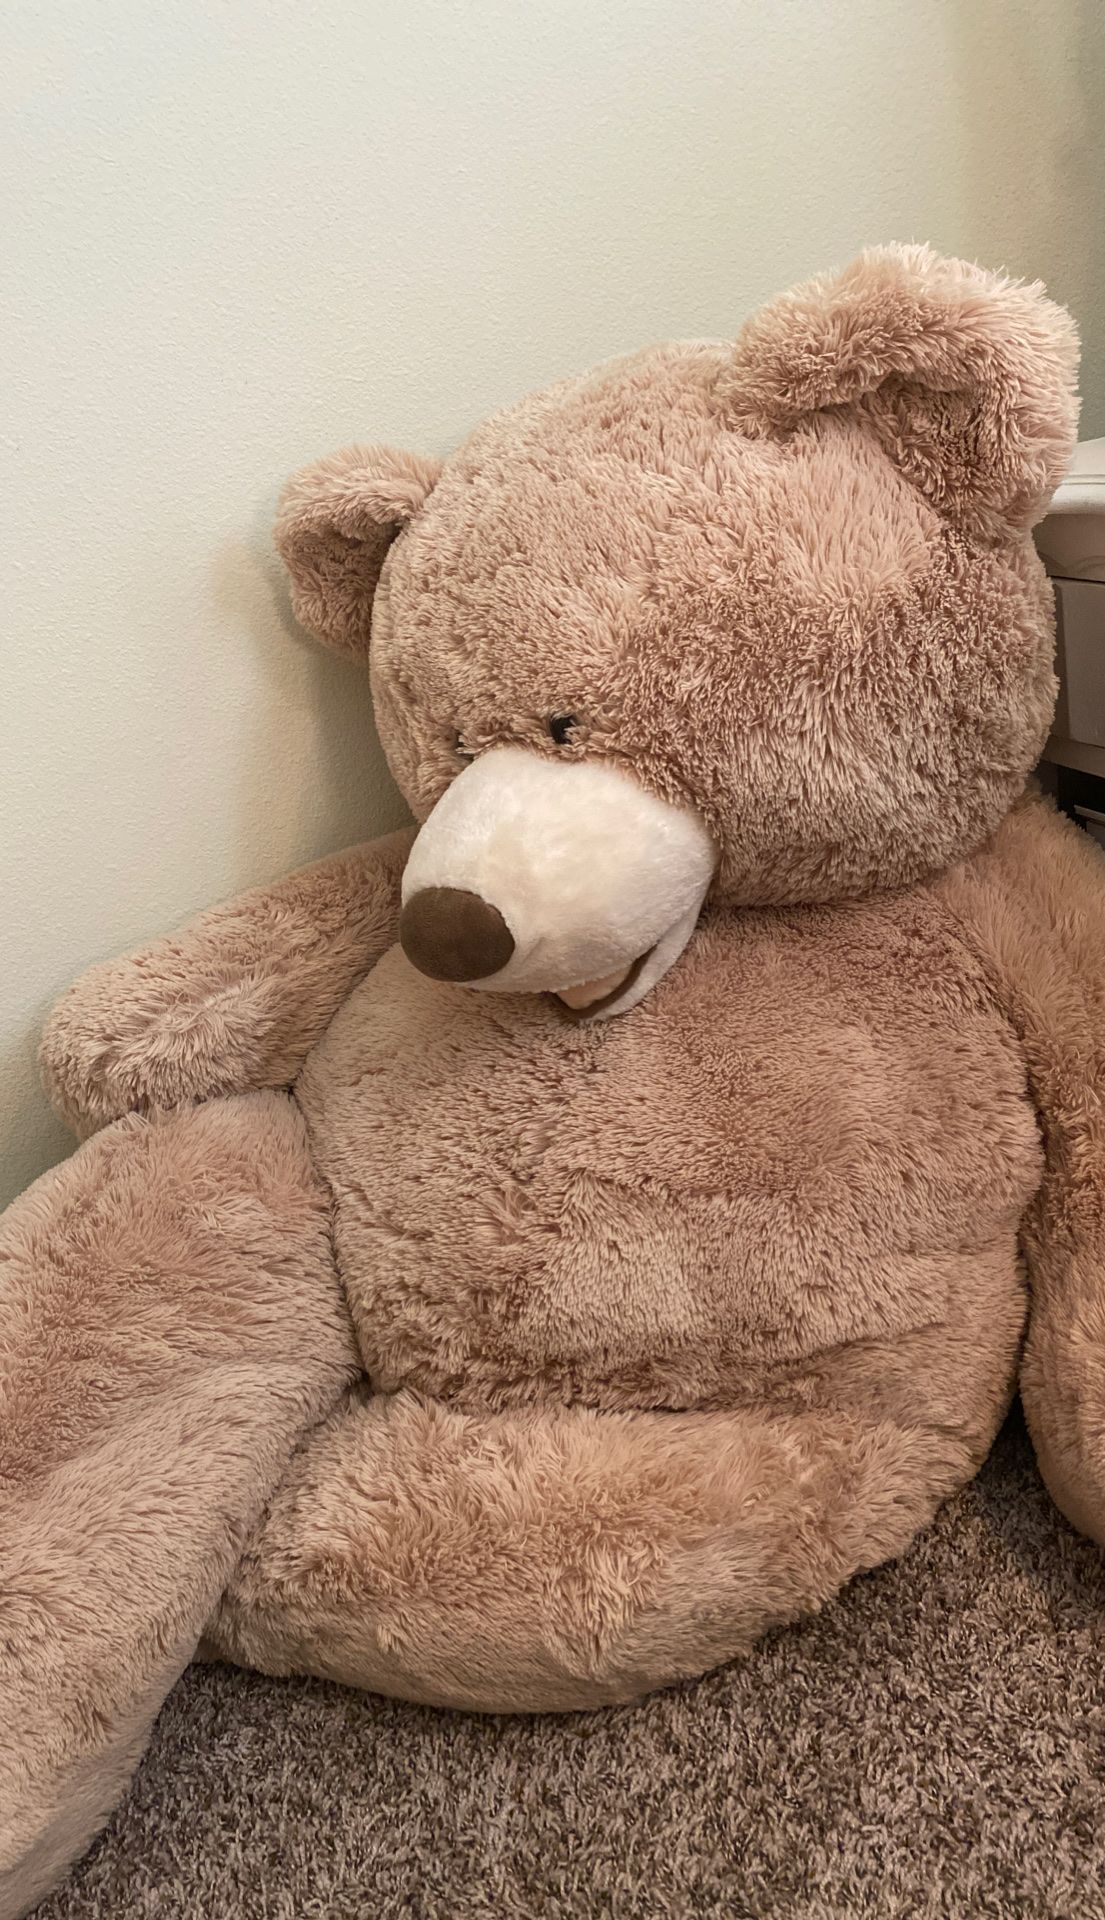 Big bear (stuffed animal)